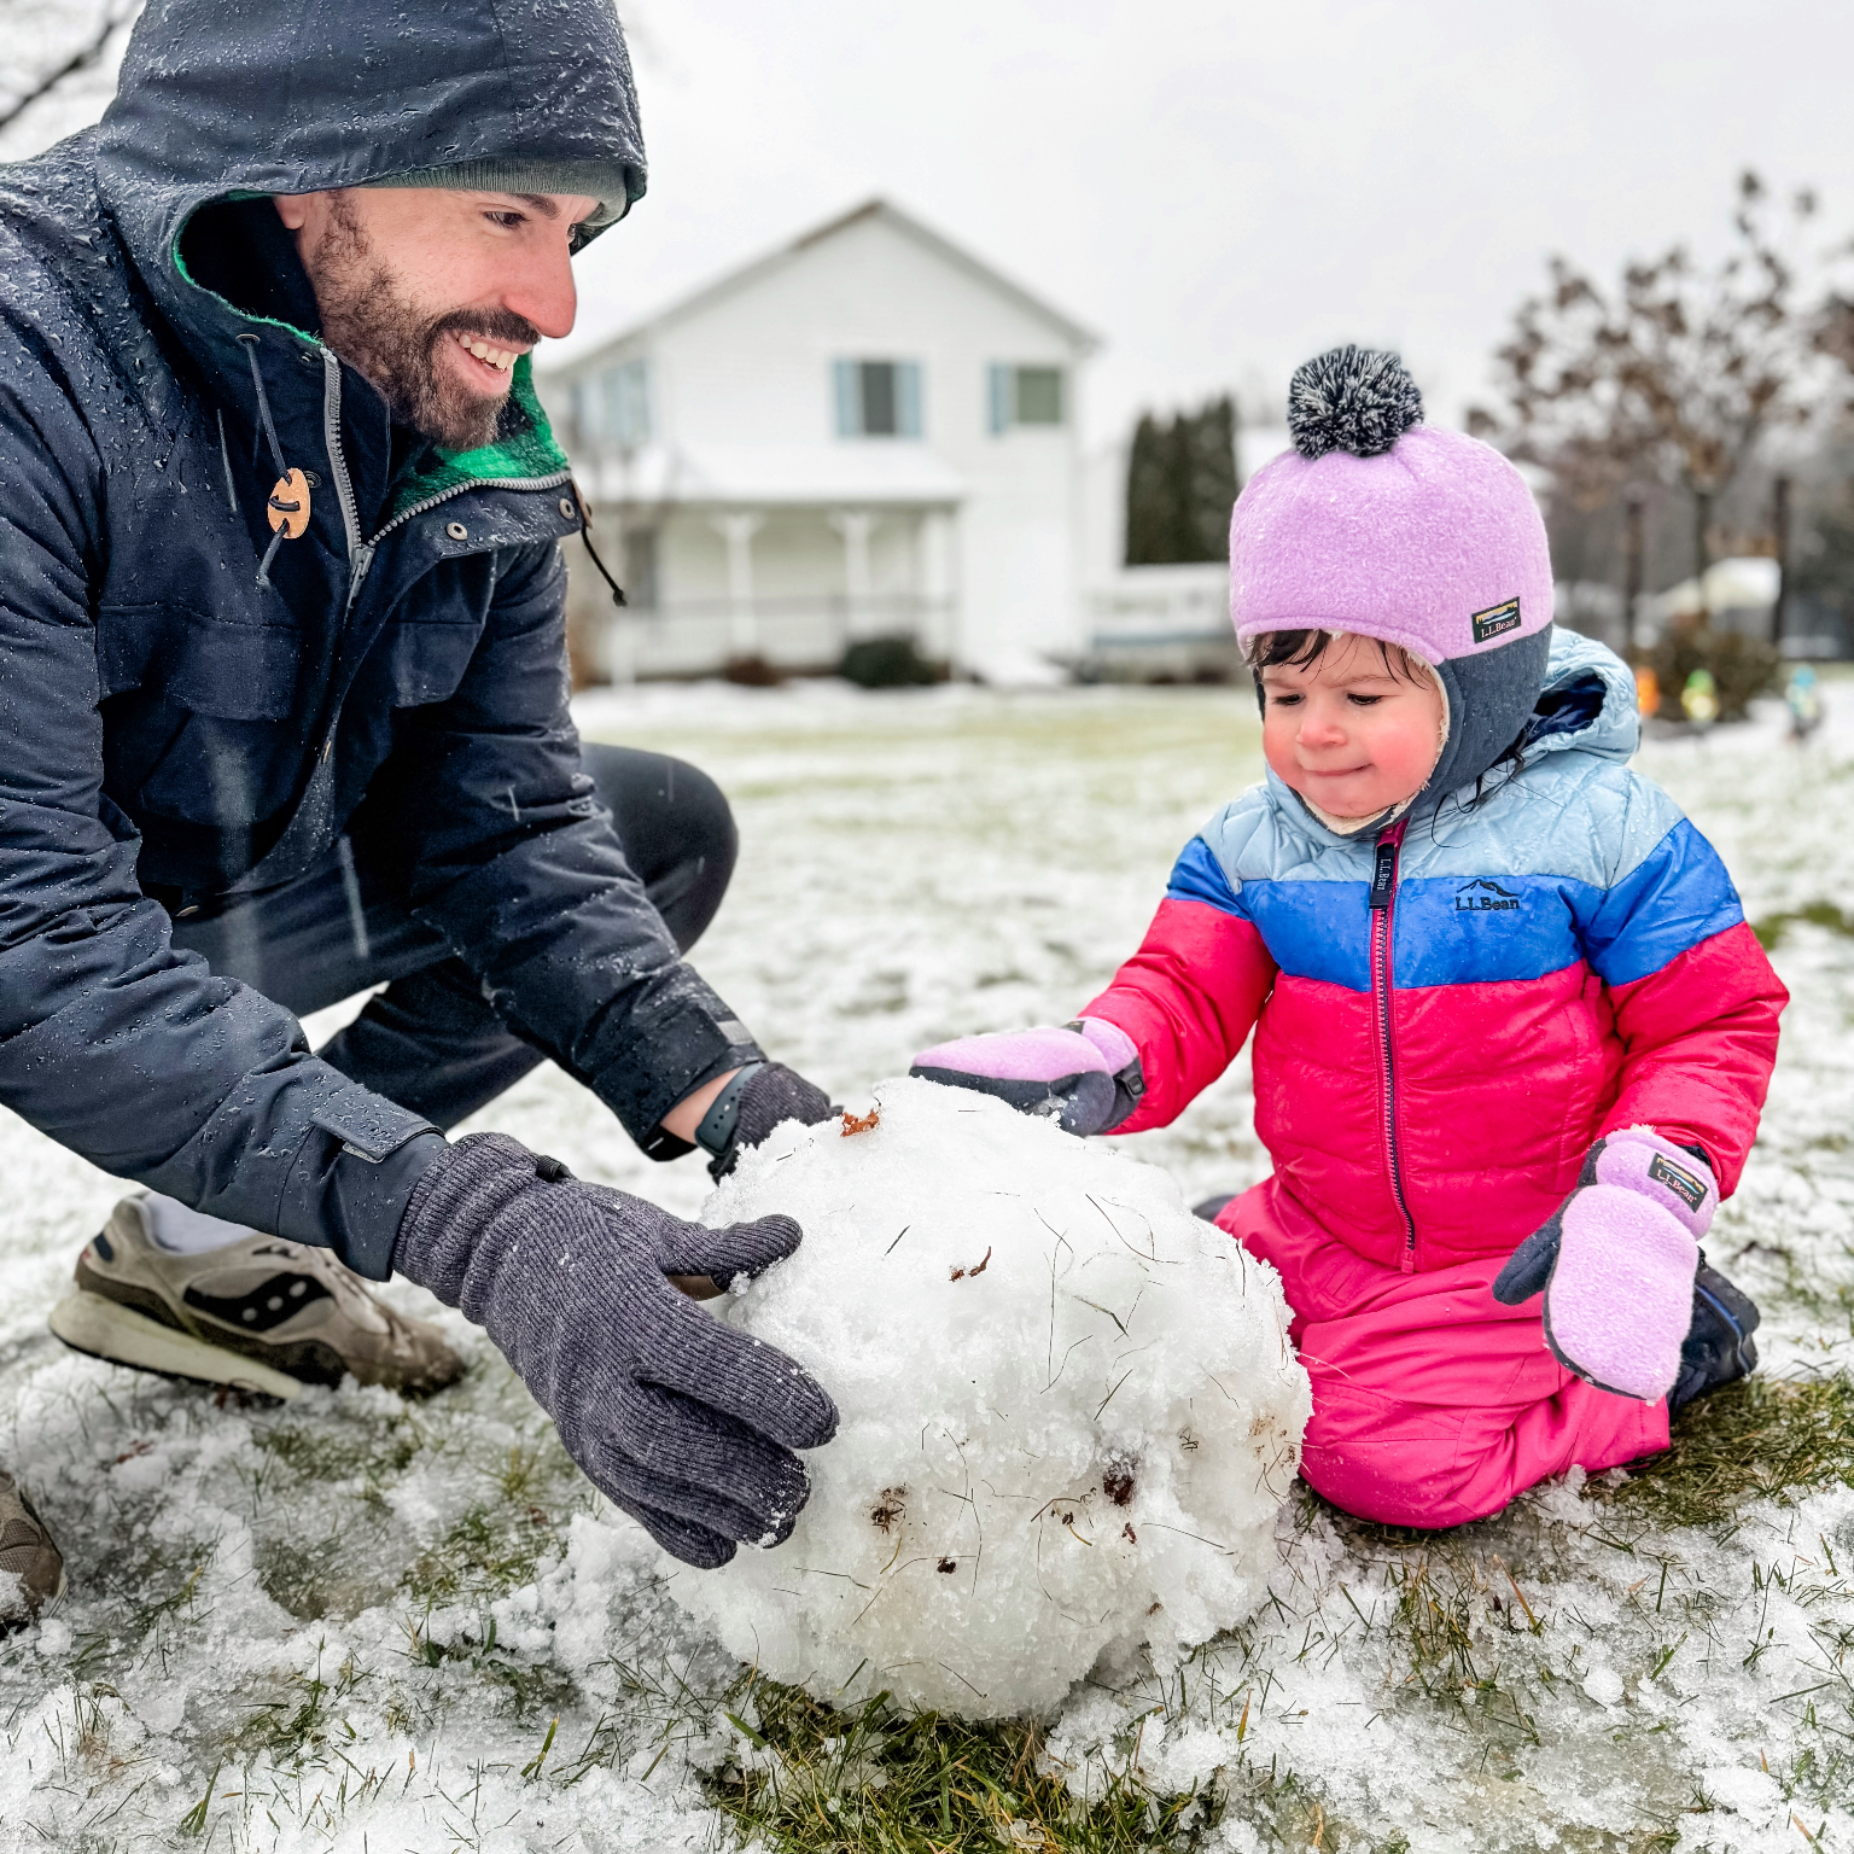 Teaching the kids how to make a snowman